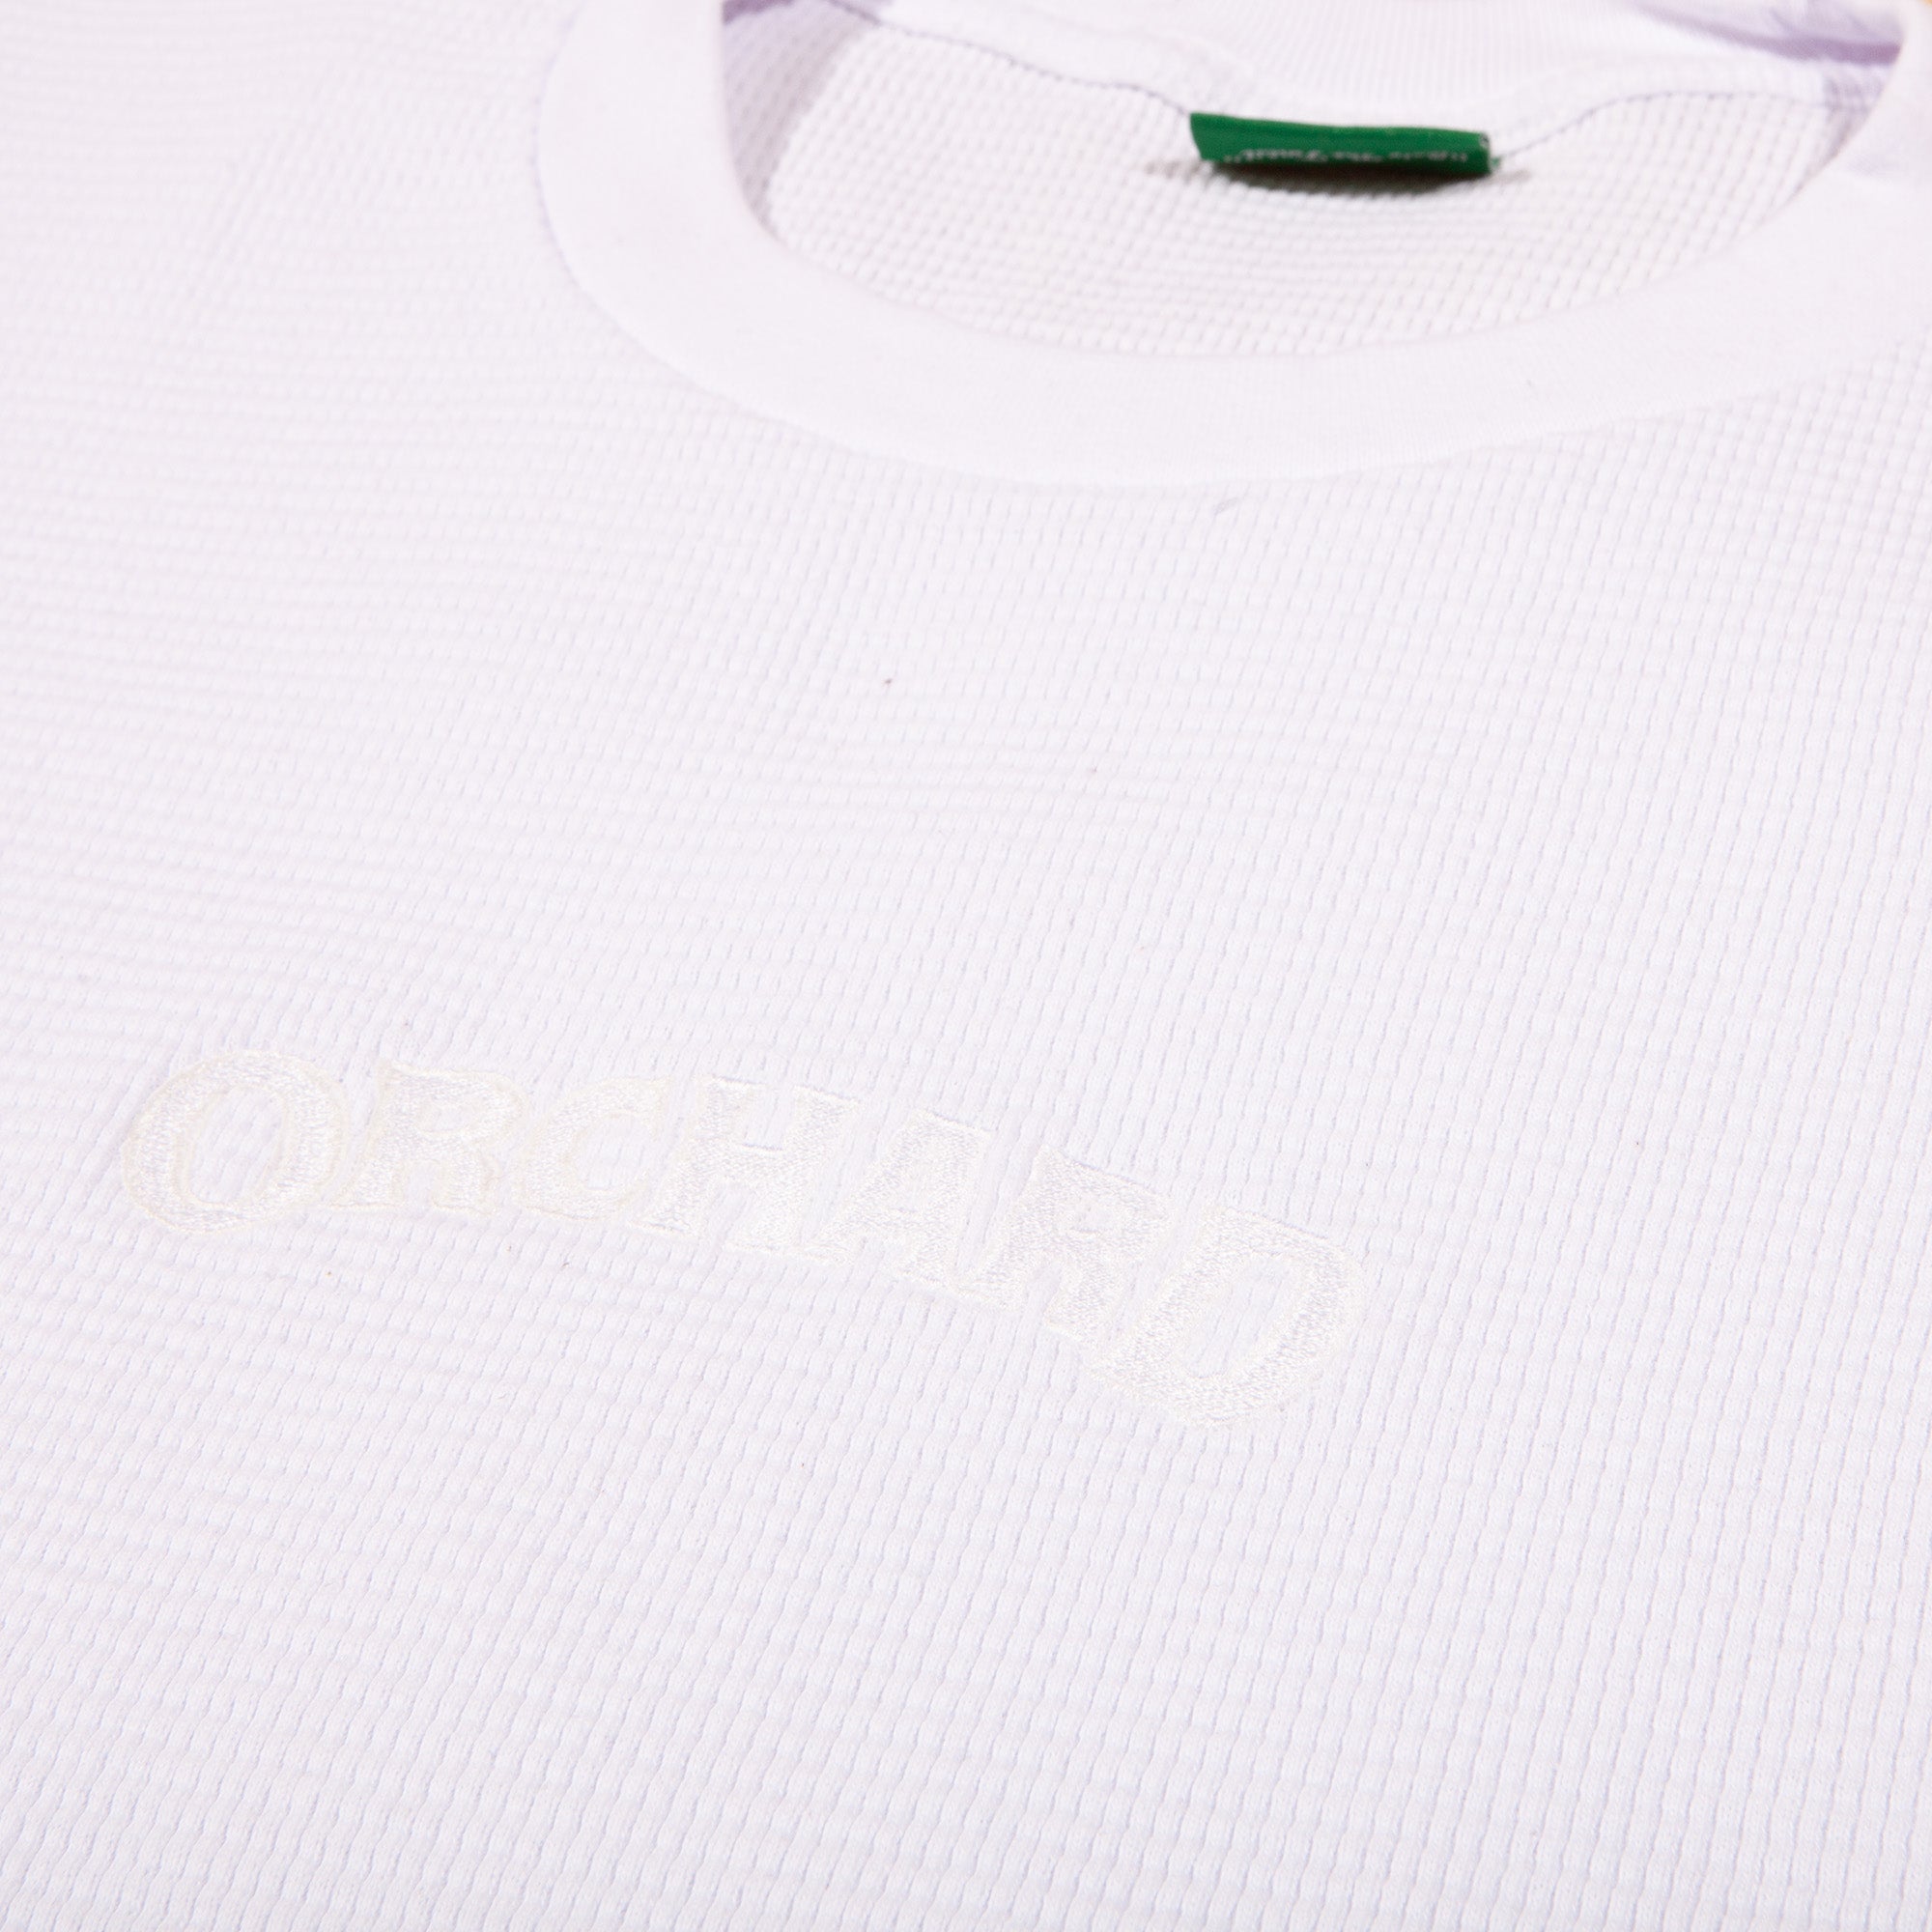 Orchard Emb Text Logo Thermal Shirt White/White